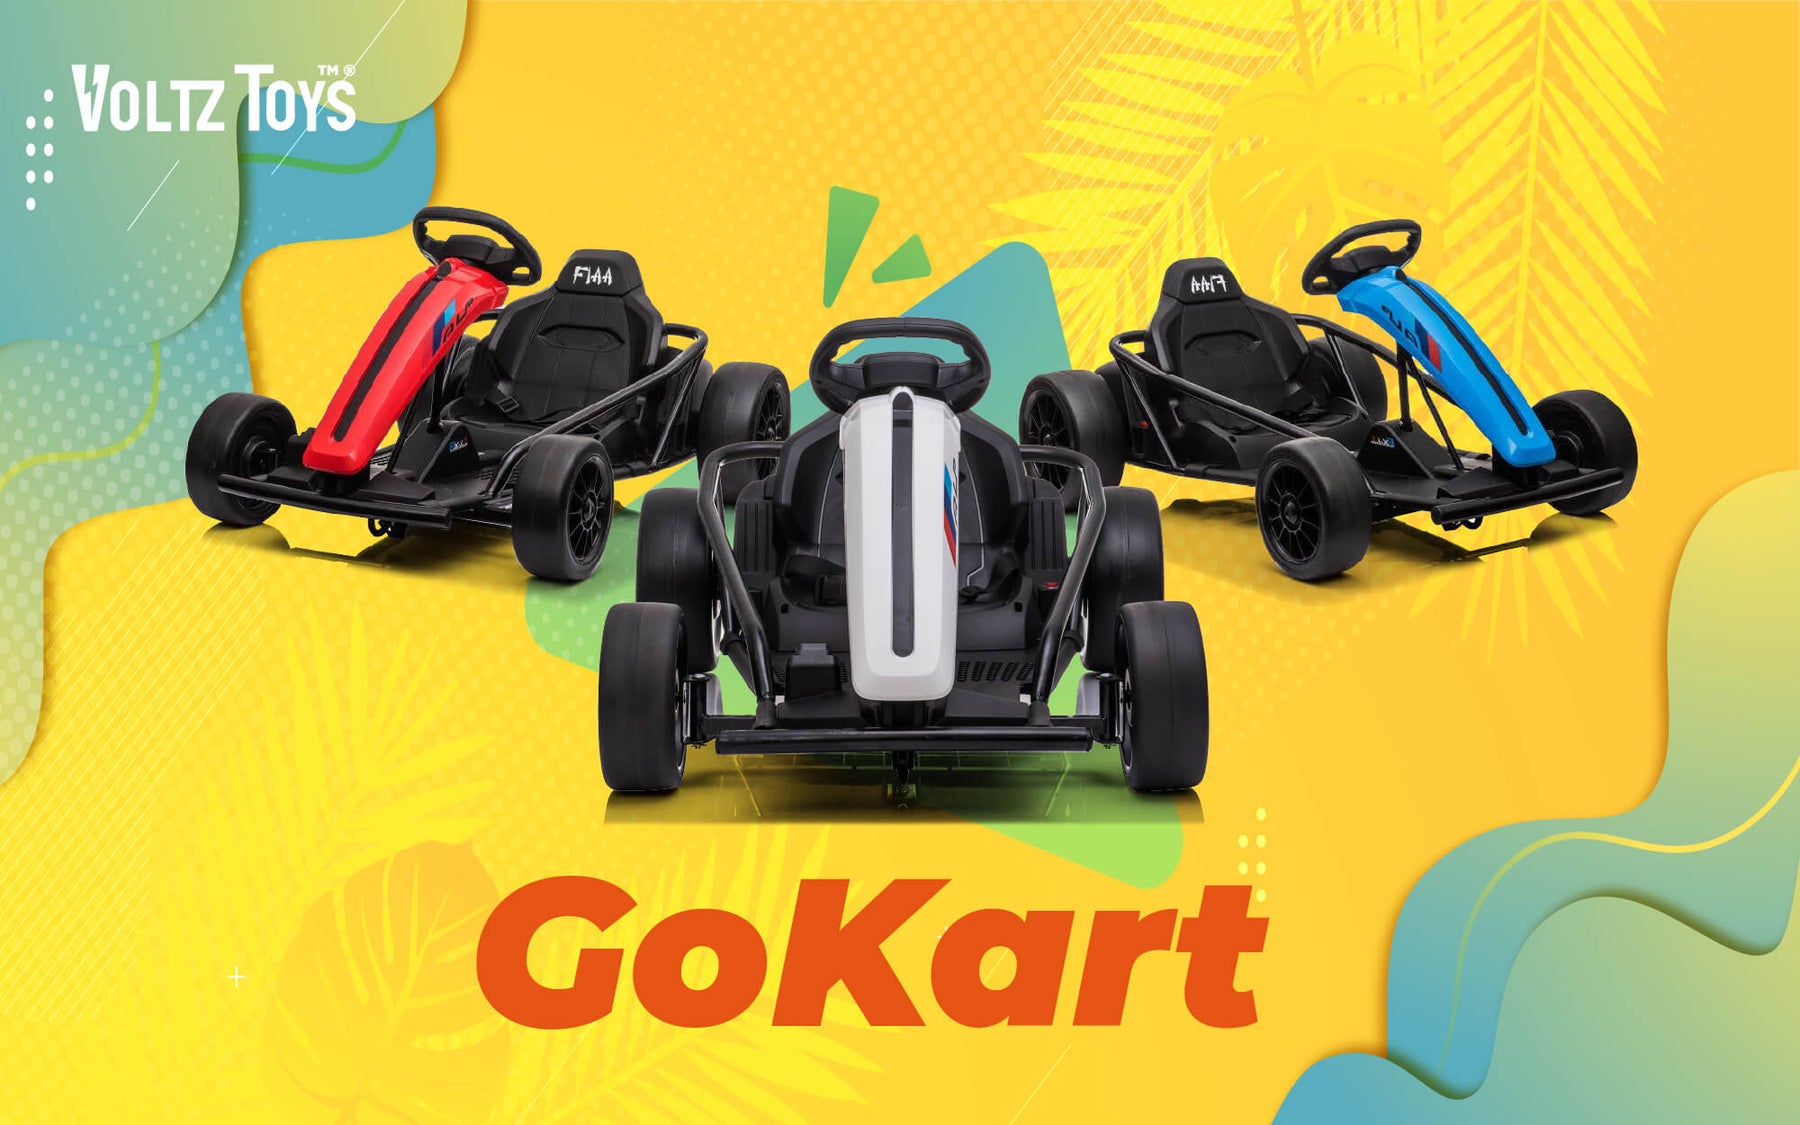 Off-road GoKart Racer Drifter - The best outdoor off-road karting for kids